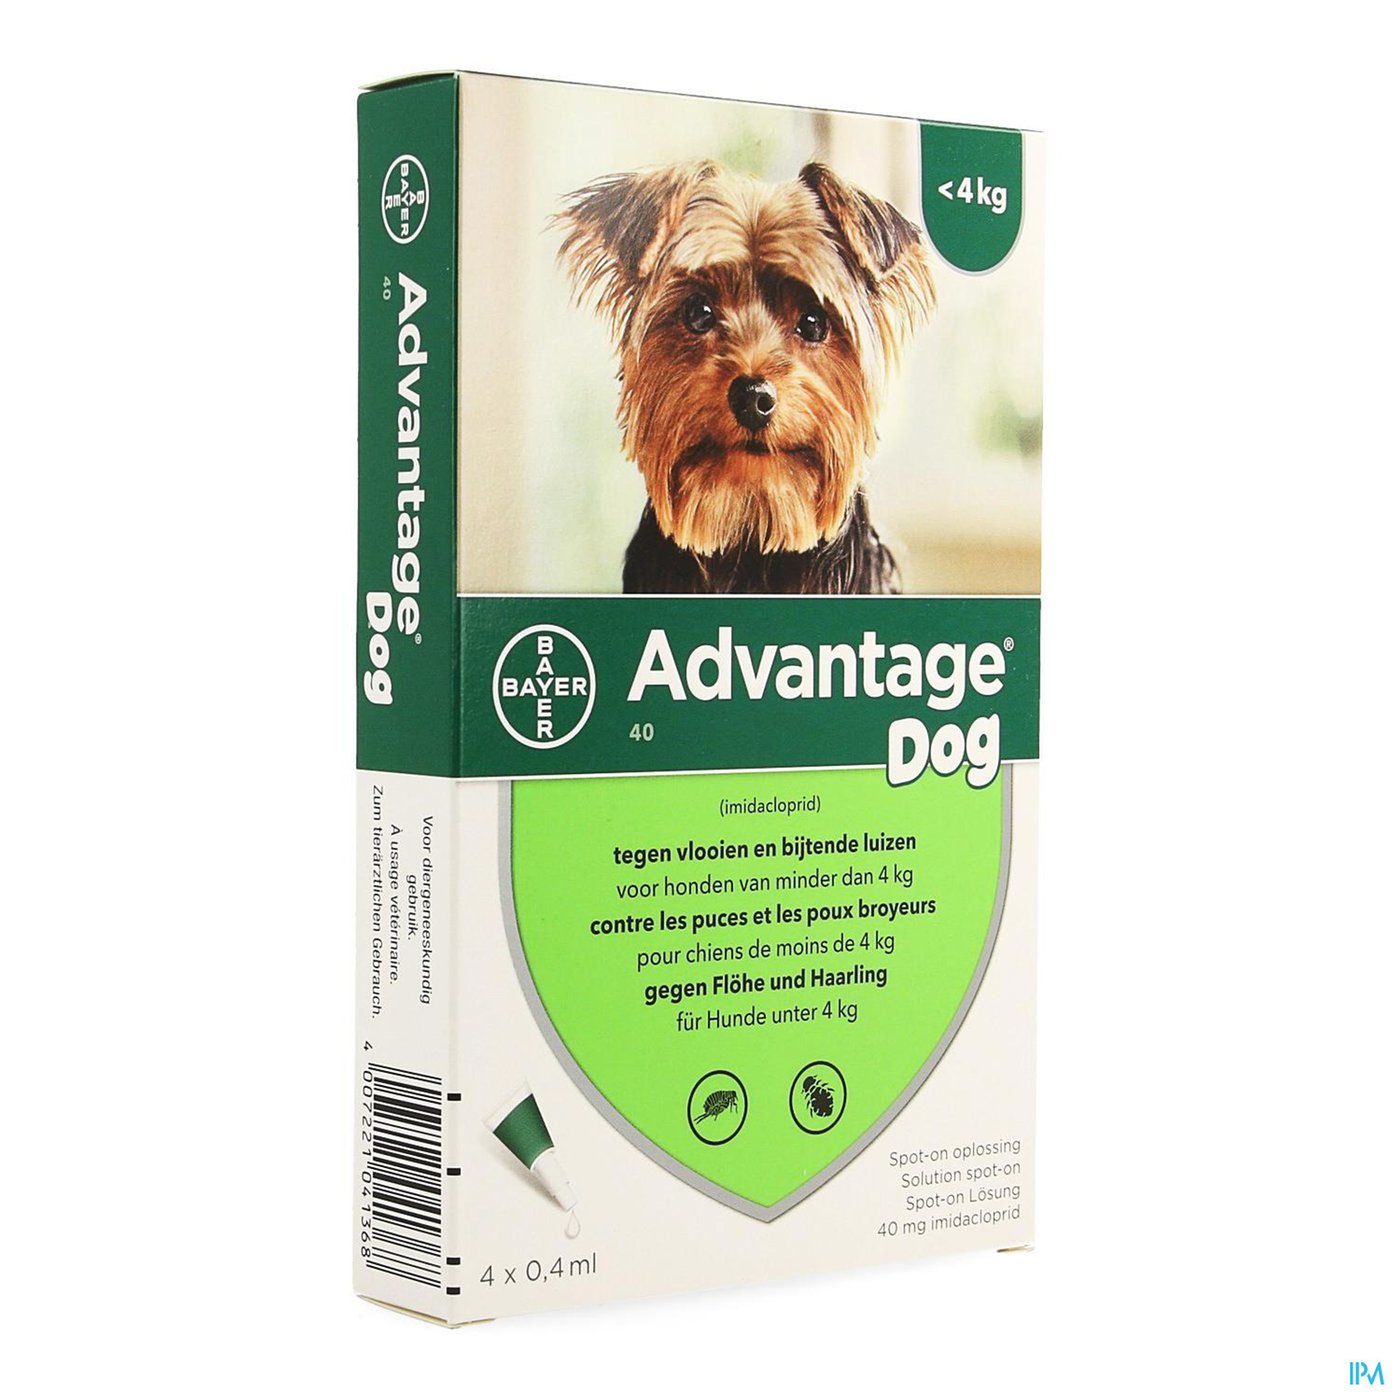 Advantage 40 Honden <4kg 4x0,4ml packshot